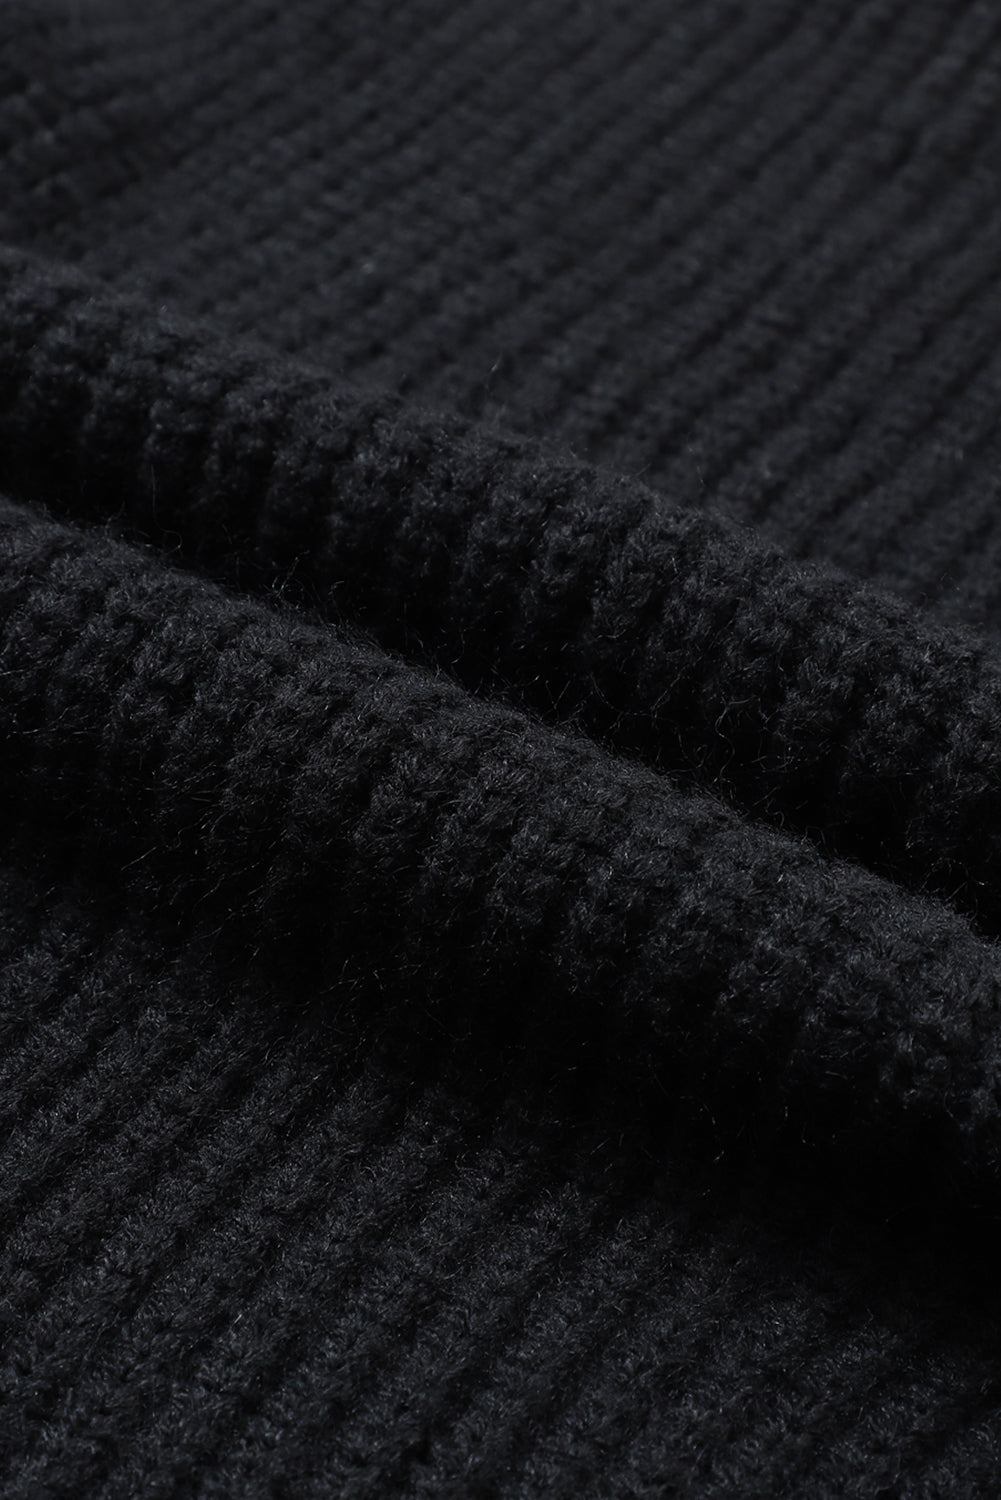 Black Oversized Fold Over Sleeve Sweater Cardigan